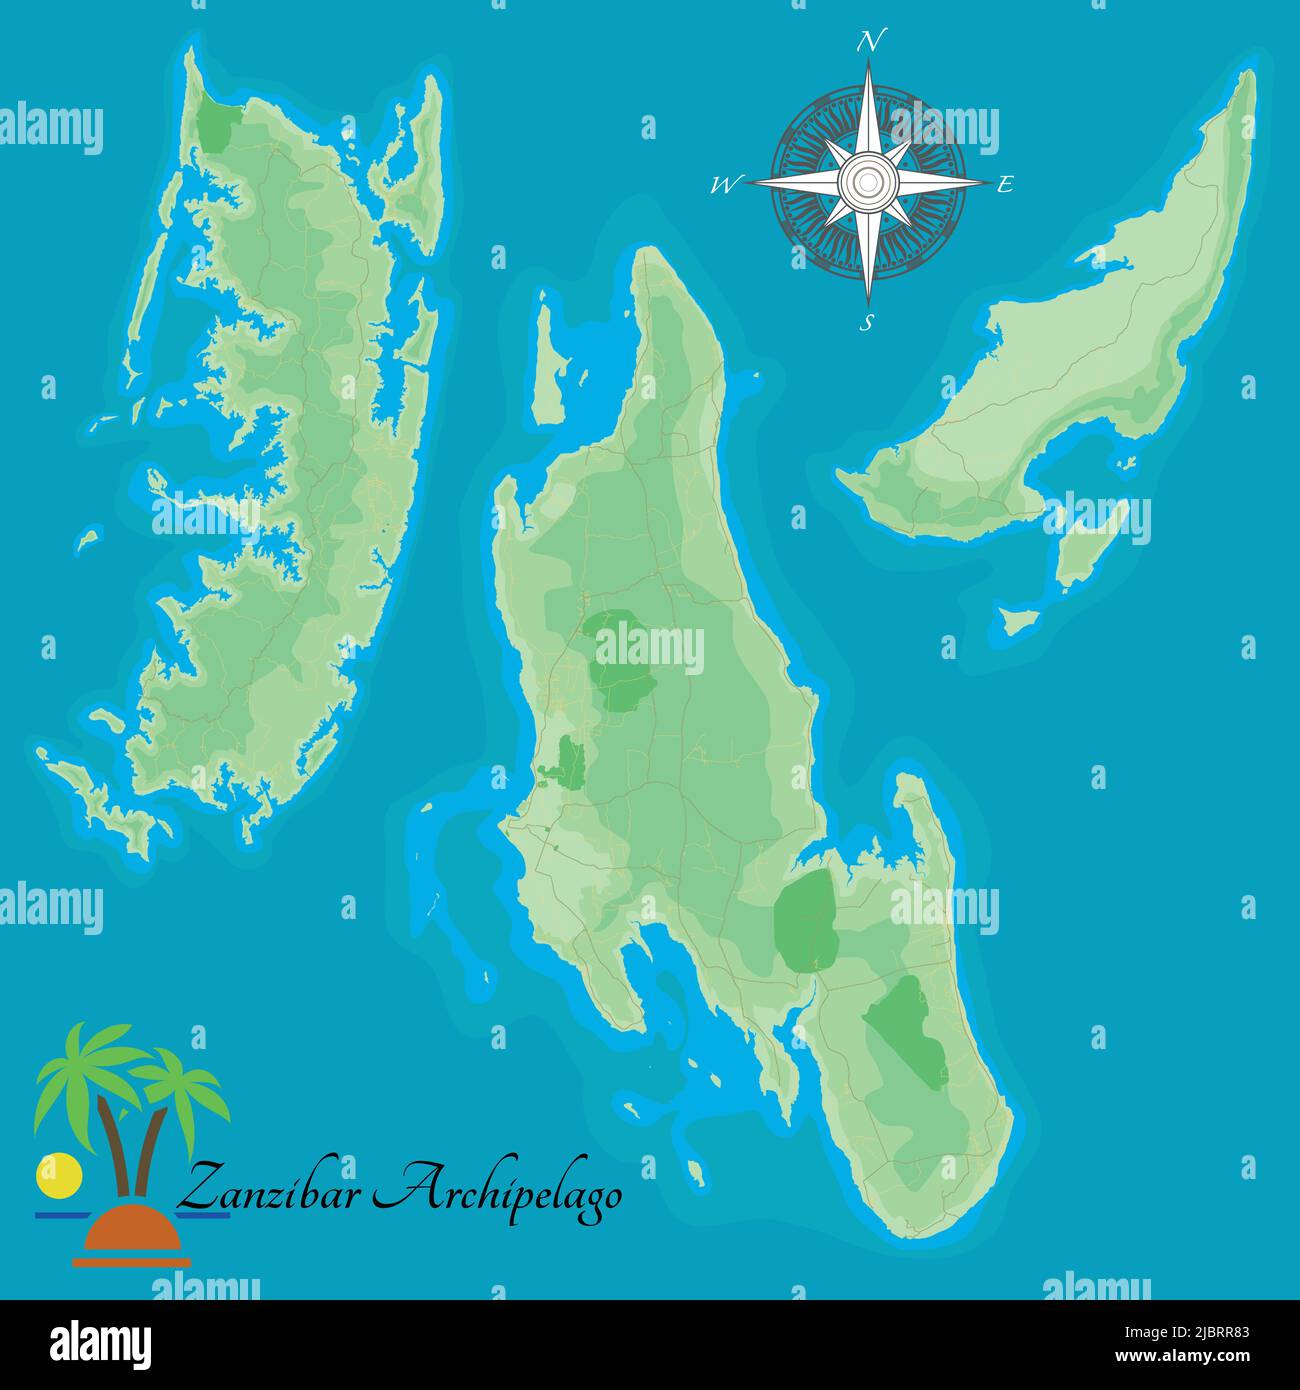 Zanzibar Archipelago. Realistic illustration of islands Unguja Island, Pemba Island, Mafia Island, semi-autonomous region of Tanzania. Road map. Stock Vector